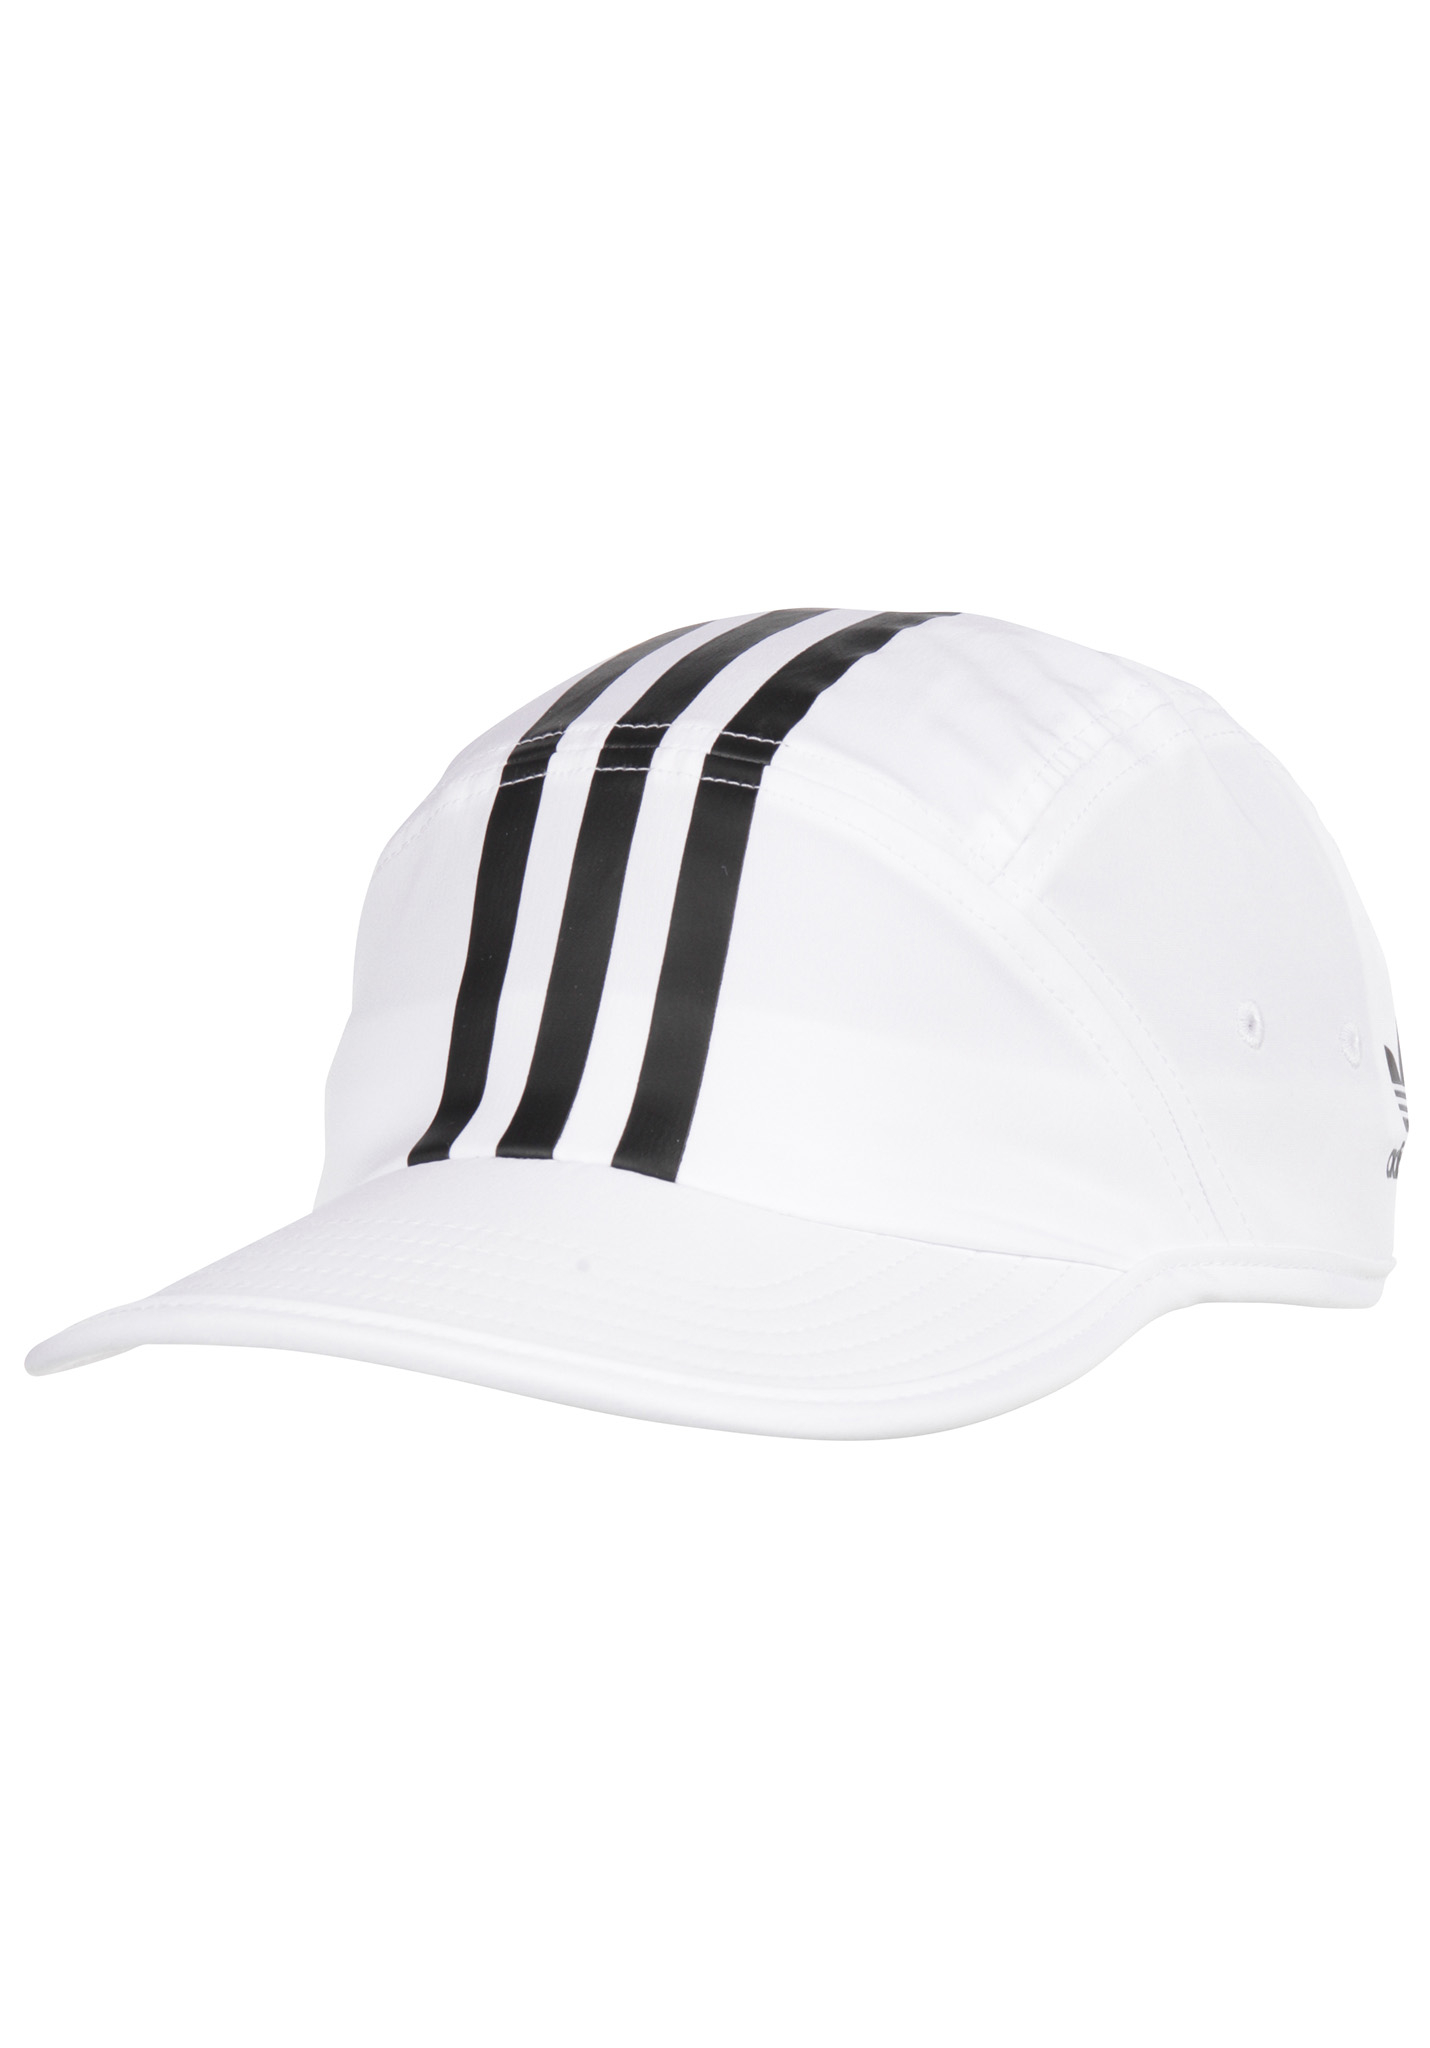 Adidas Originals Tech 3 Stripe Strapback Cap white-black One Size